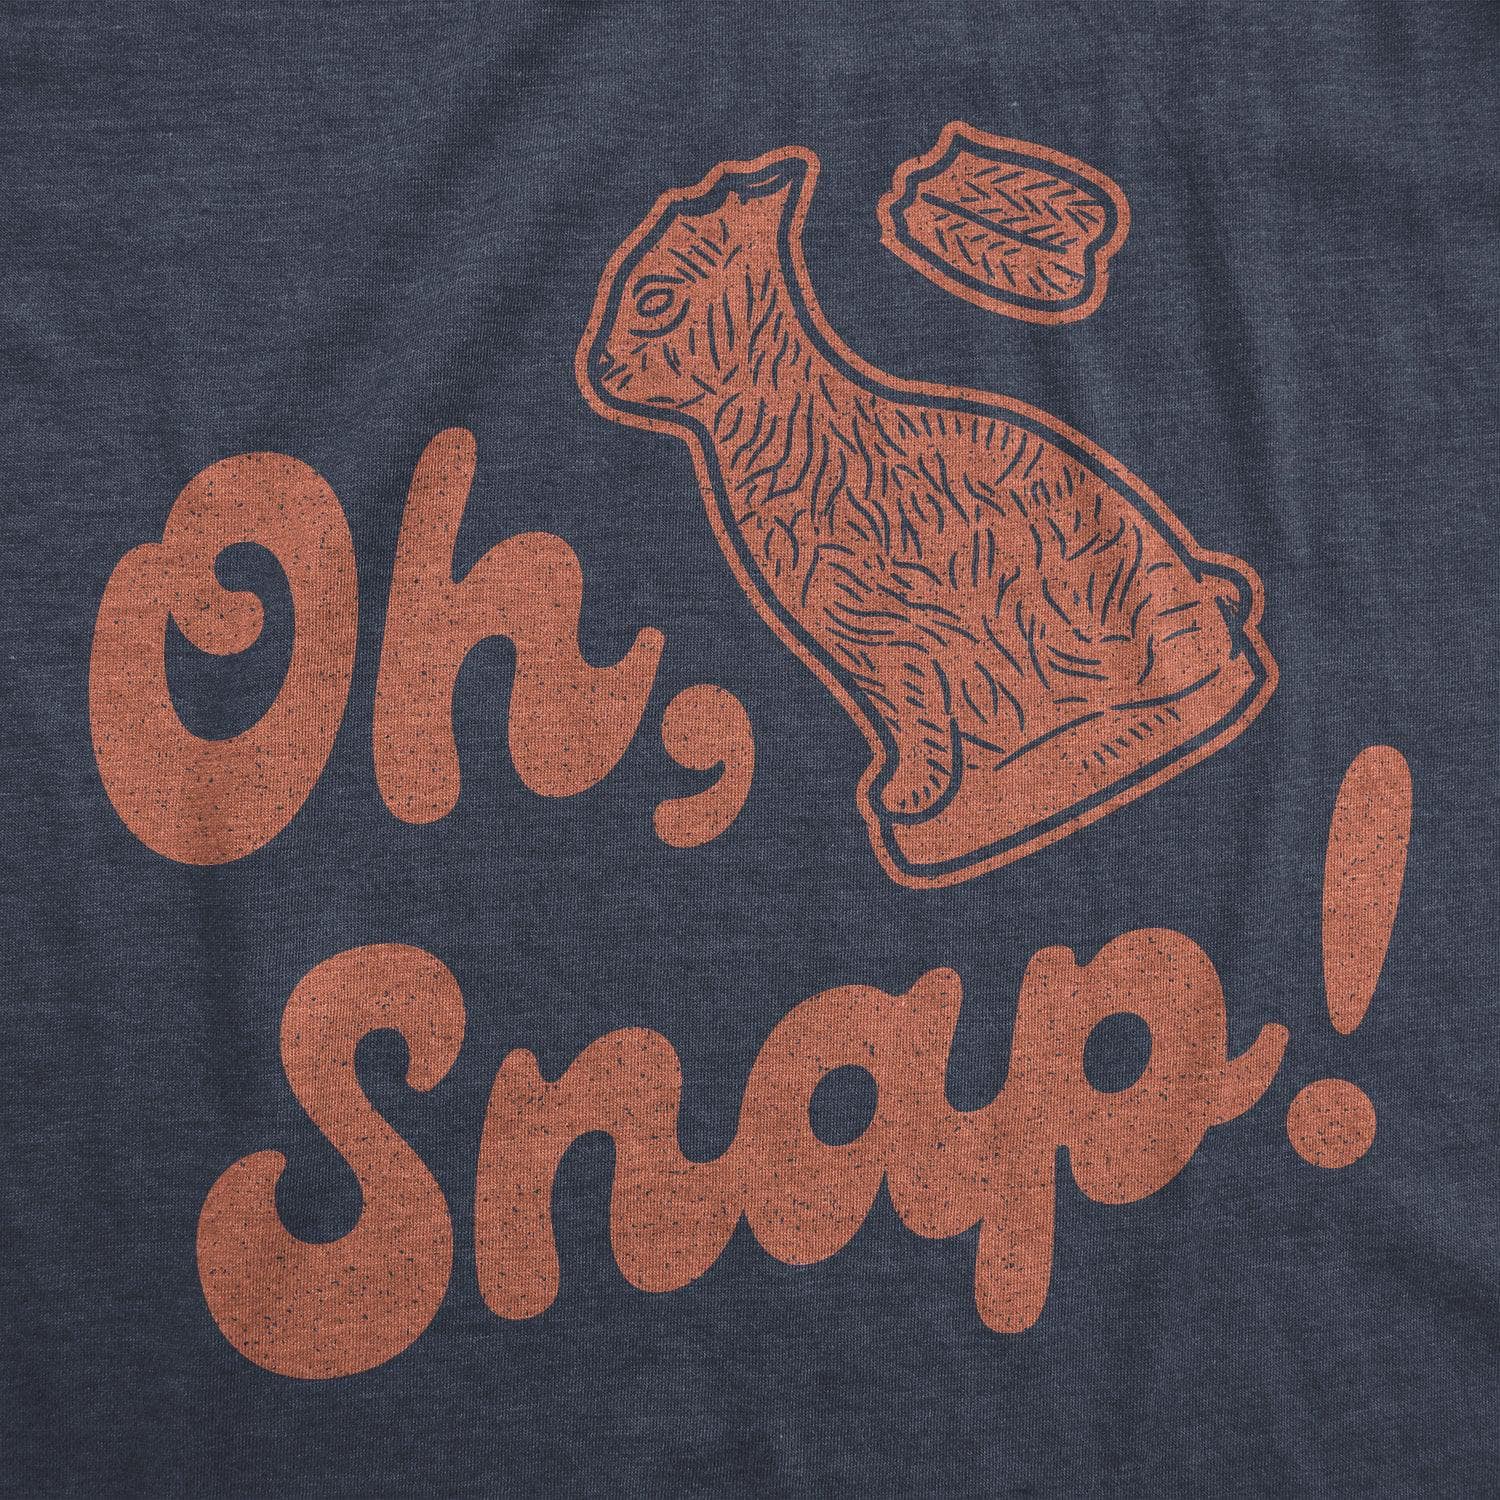 Oh Snap Easter Men's Tshirt  -  Crazy Dog T-Shirts